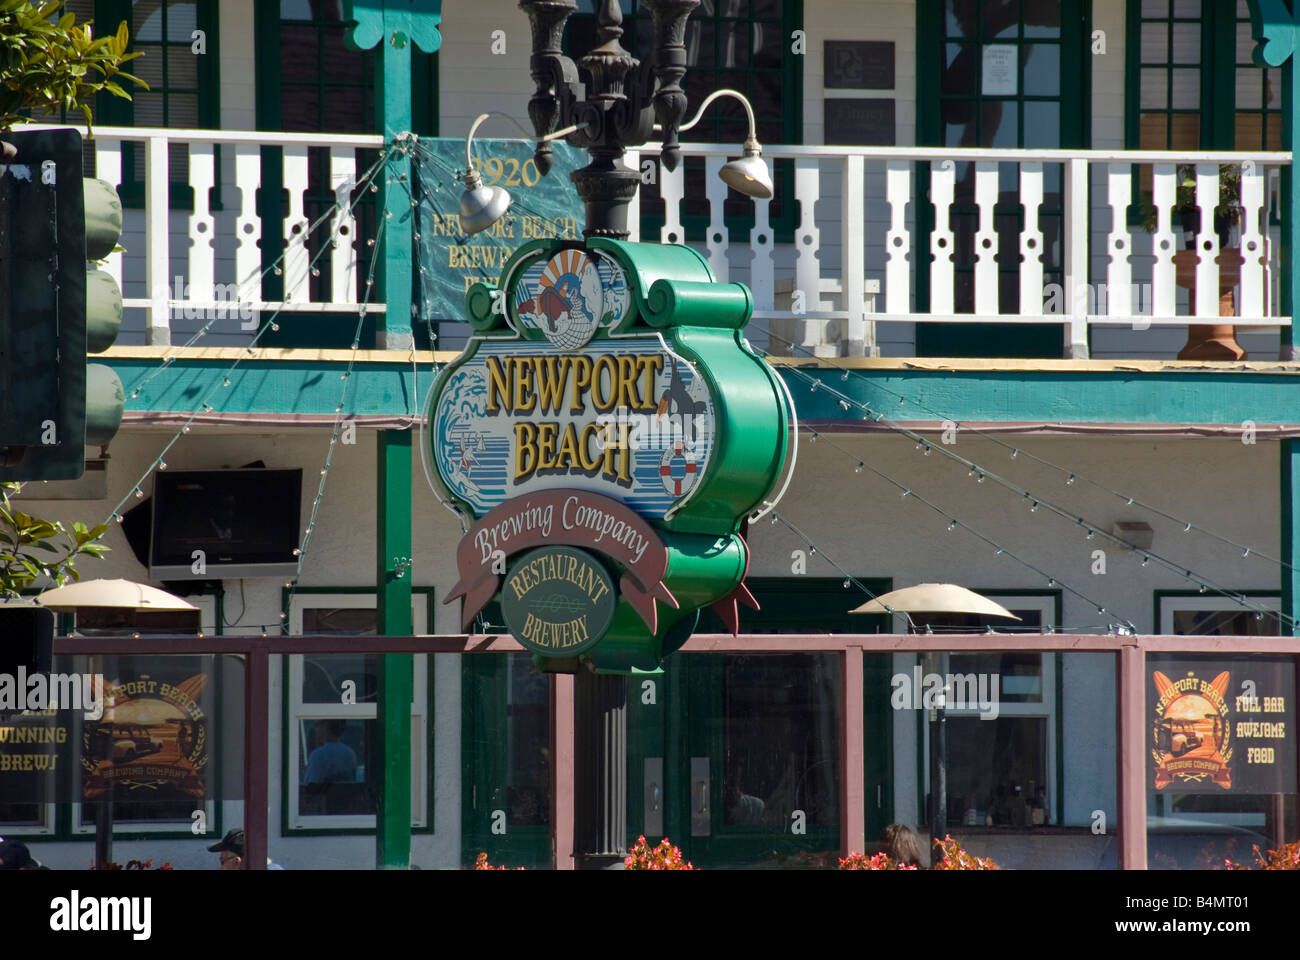 Newport Beach Brewing Company NBBrewCo Balboa Peninsula California usa Stock Photo